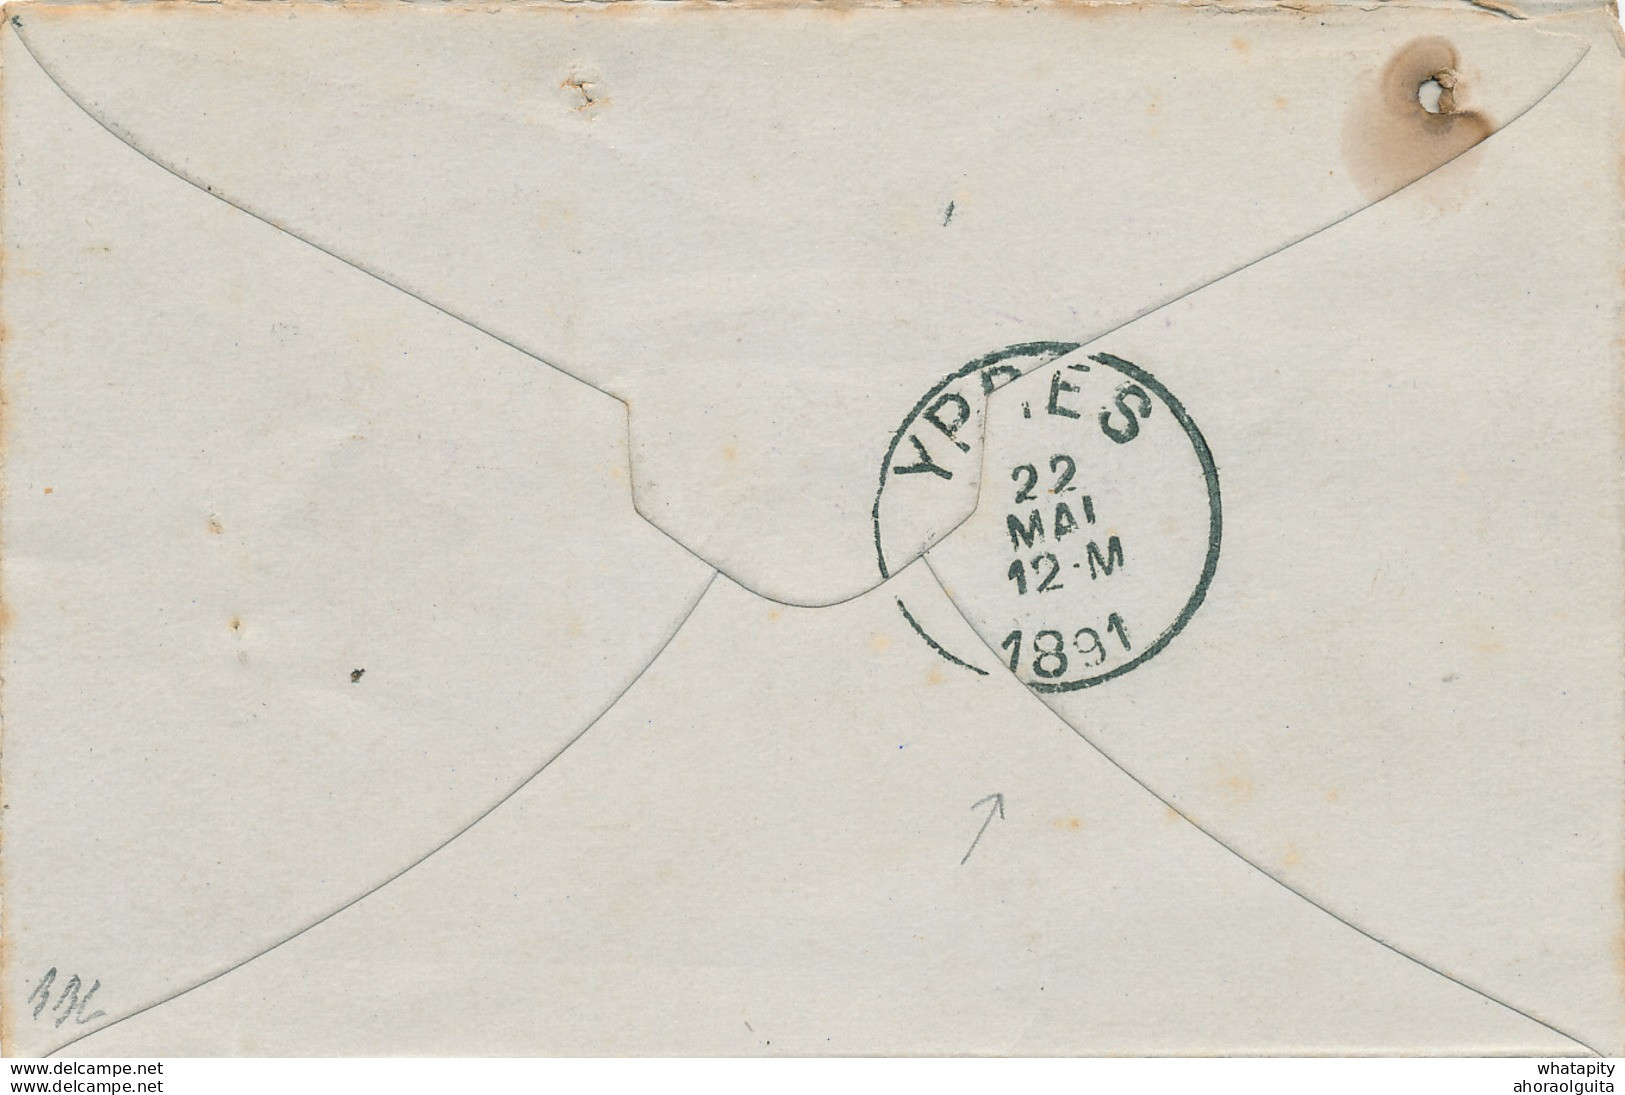 YY196 - Enveloppe - Lettre Emission 1884 EESSEN 1891 Vers YPRES - Signé Vlaminck - NIPA 300 X 3 - Letter Covers